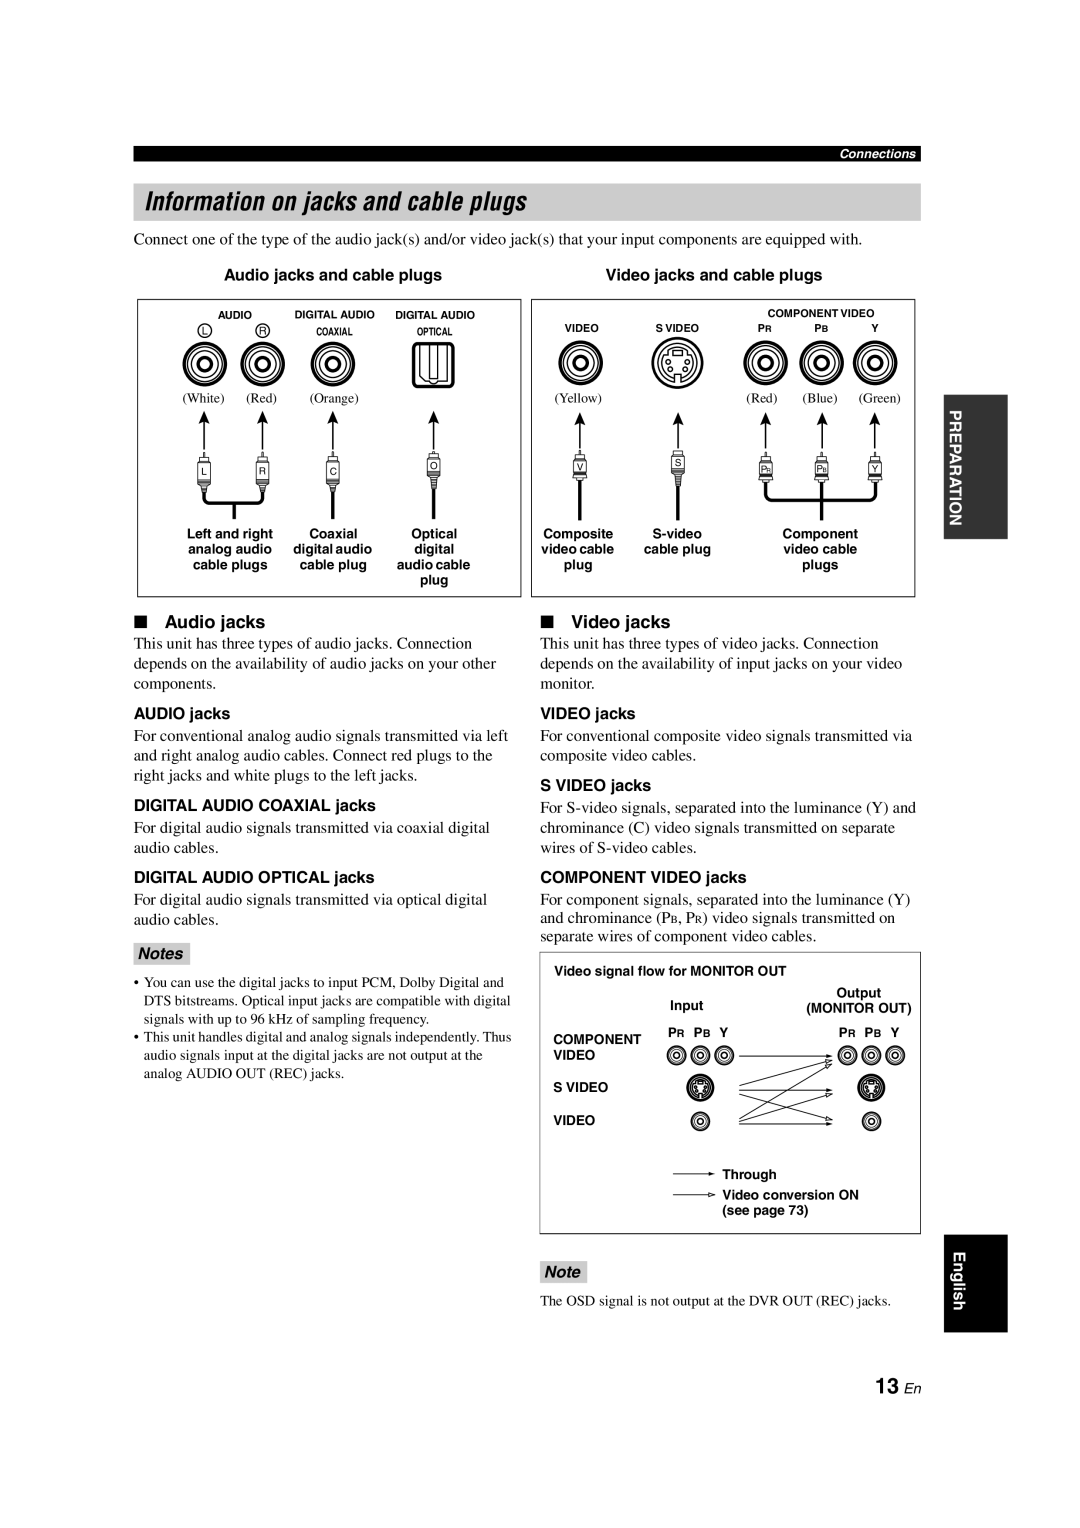 Yamaha HTR-6150 owner manual Information on jacks and cable plugs, 13 En, Audio jacks, Video jacks, Notes 